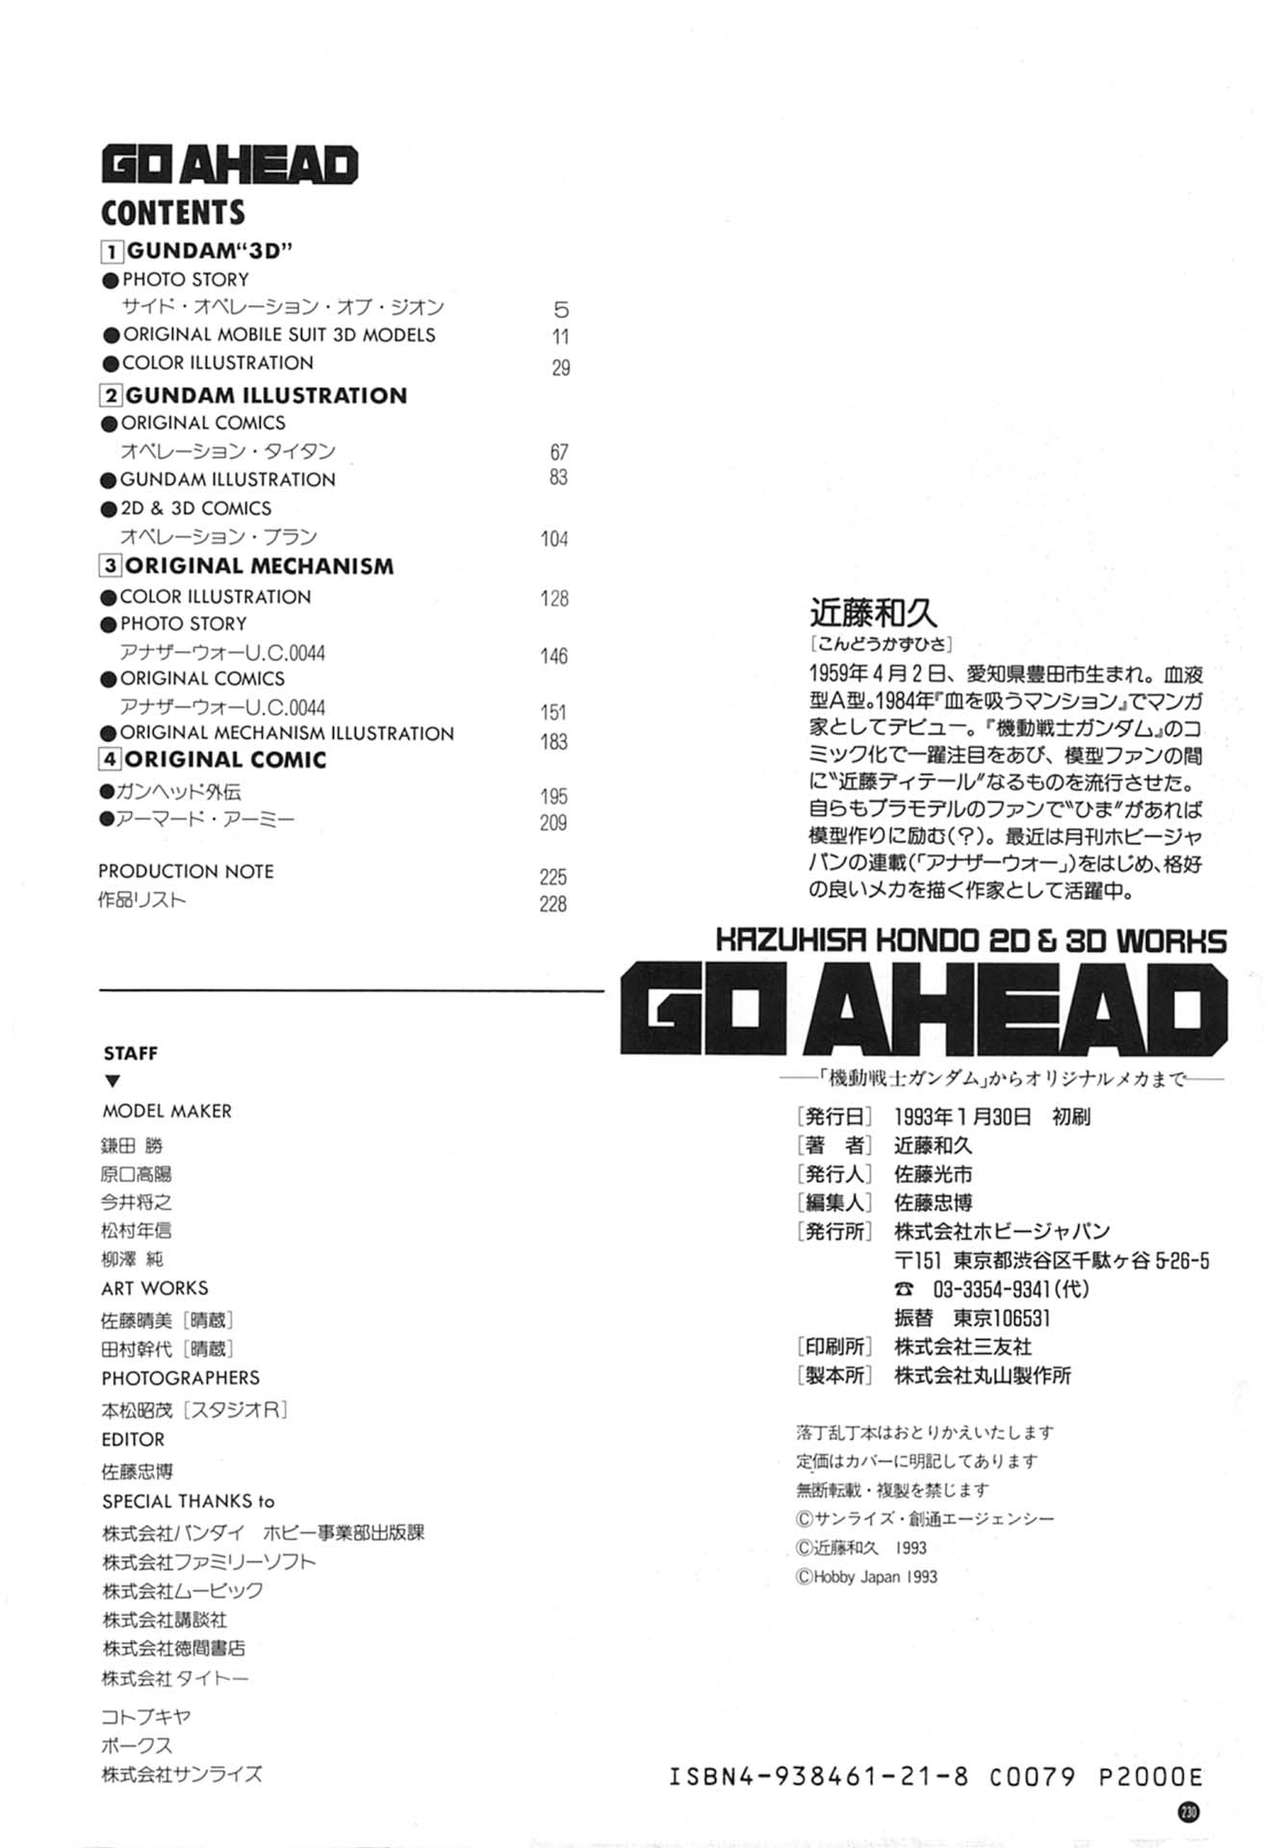 [Kazuhisa Kondo] Kazuhisa Kondo 2D & 3D Works - Go Ahead - From Mobile Suit Gundam to Original Mechanism 229